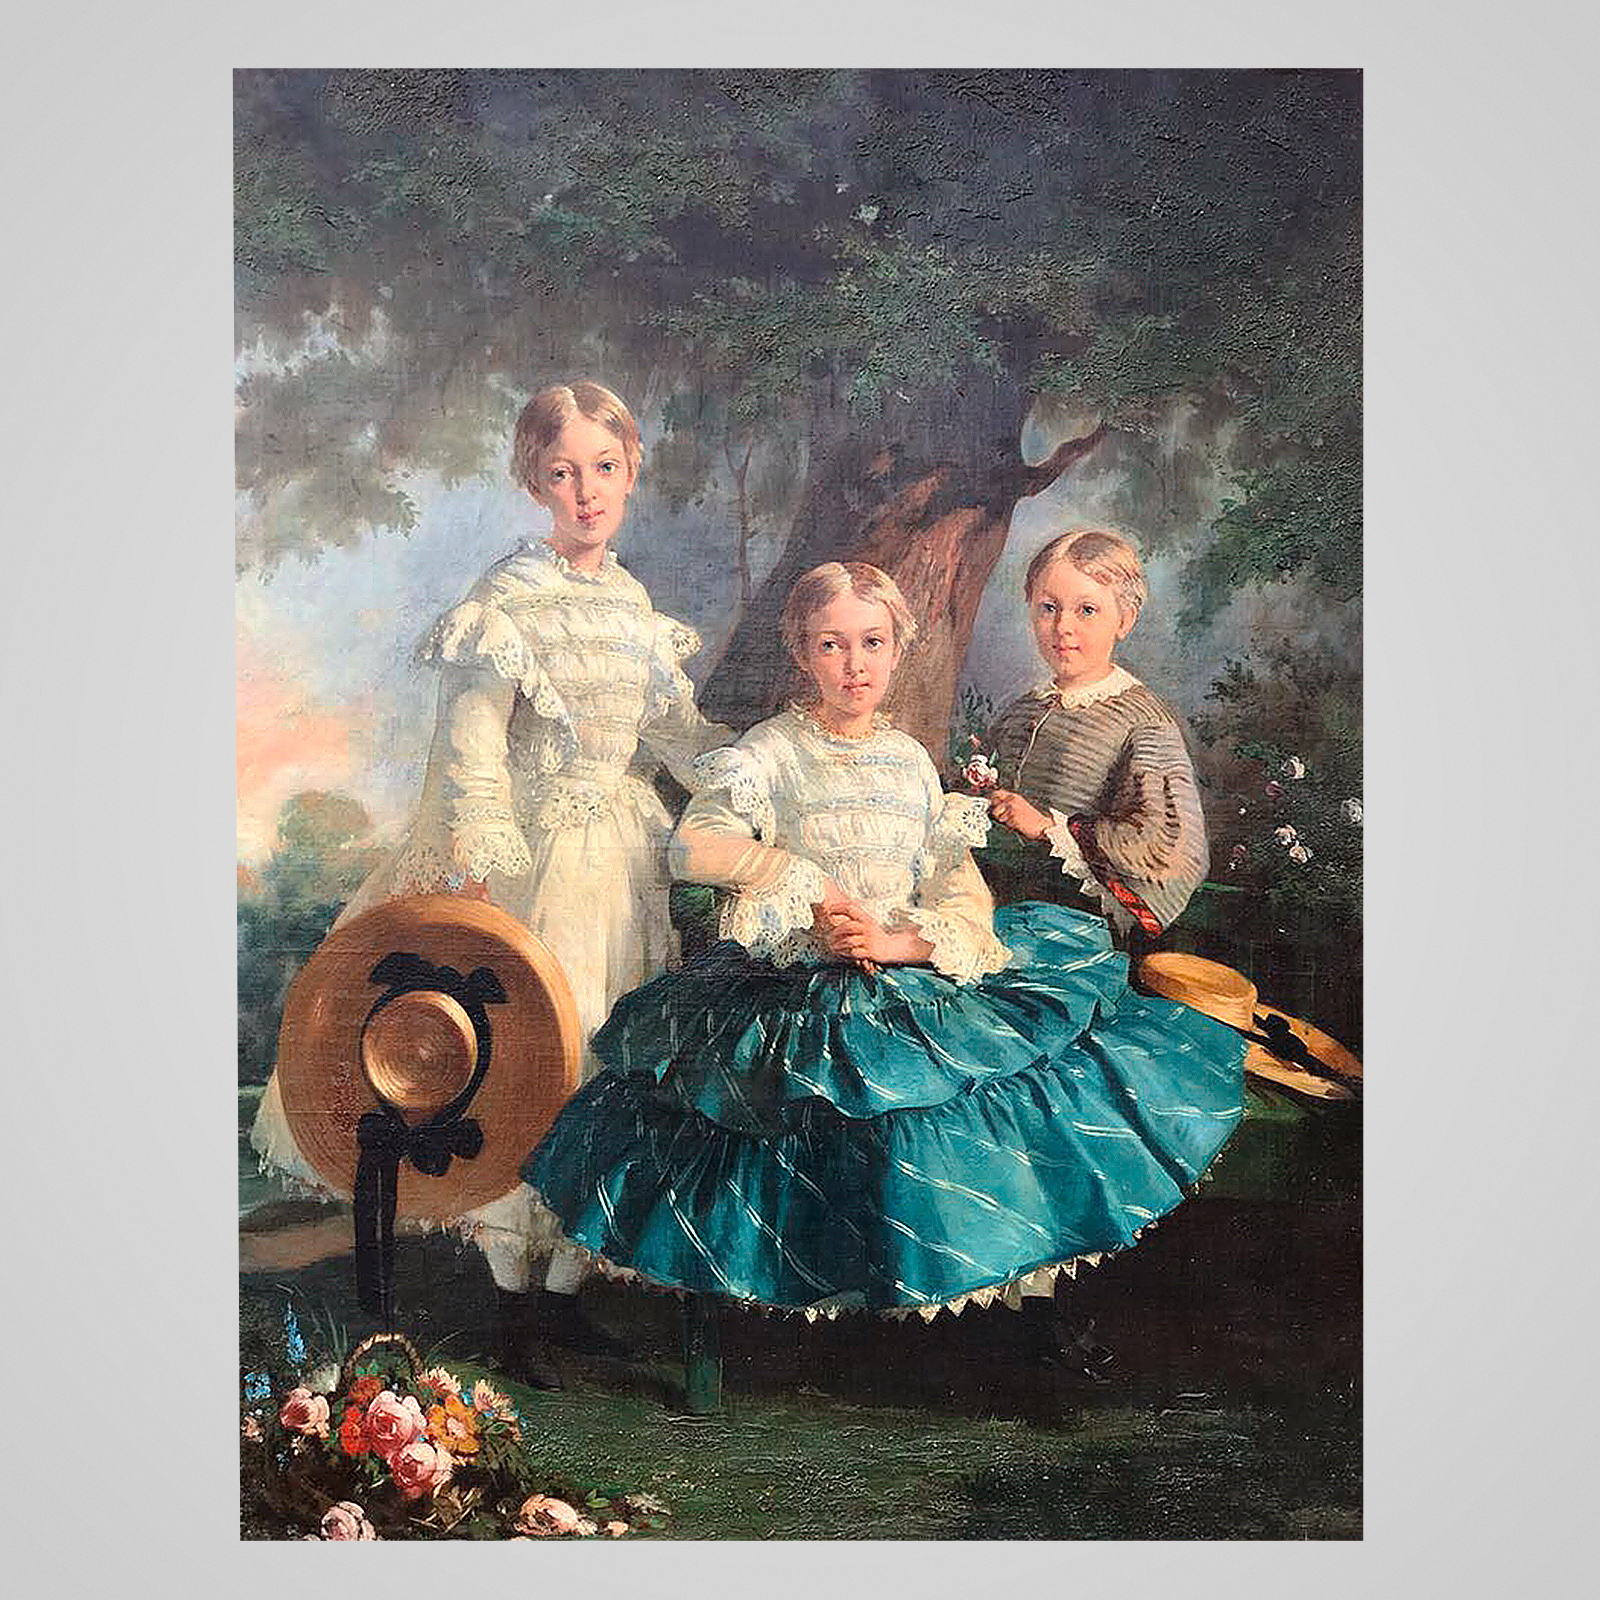 Доер Ш., "Дети в саду", 1861 г.